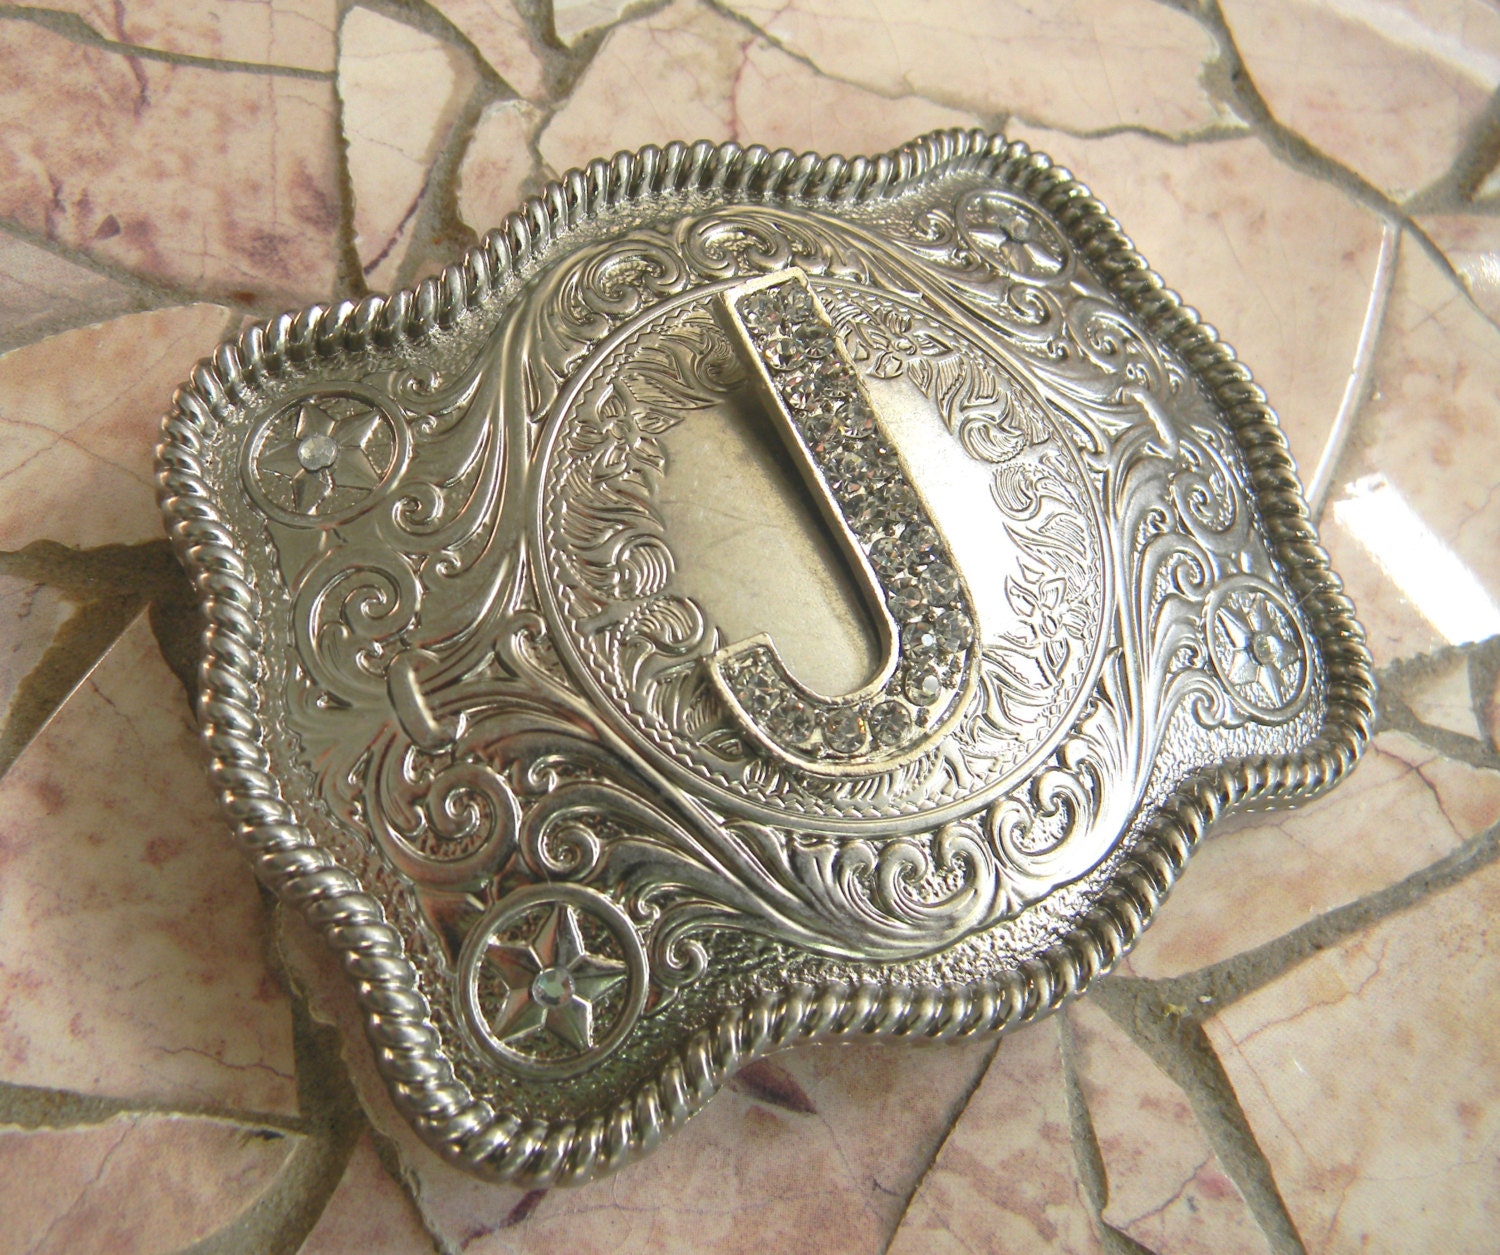 custom monogram belt buckle